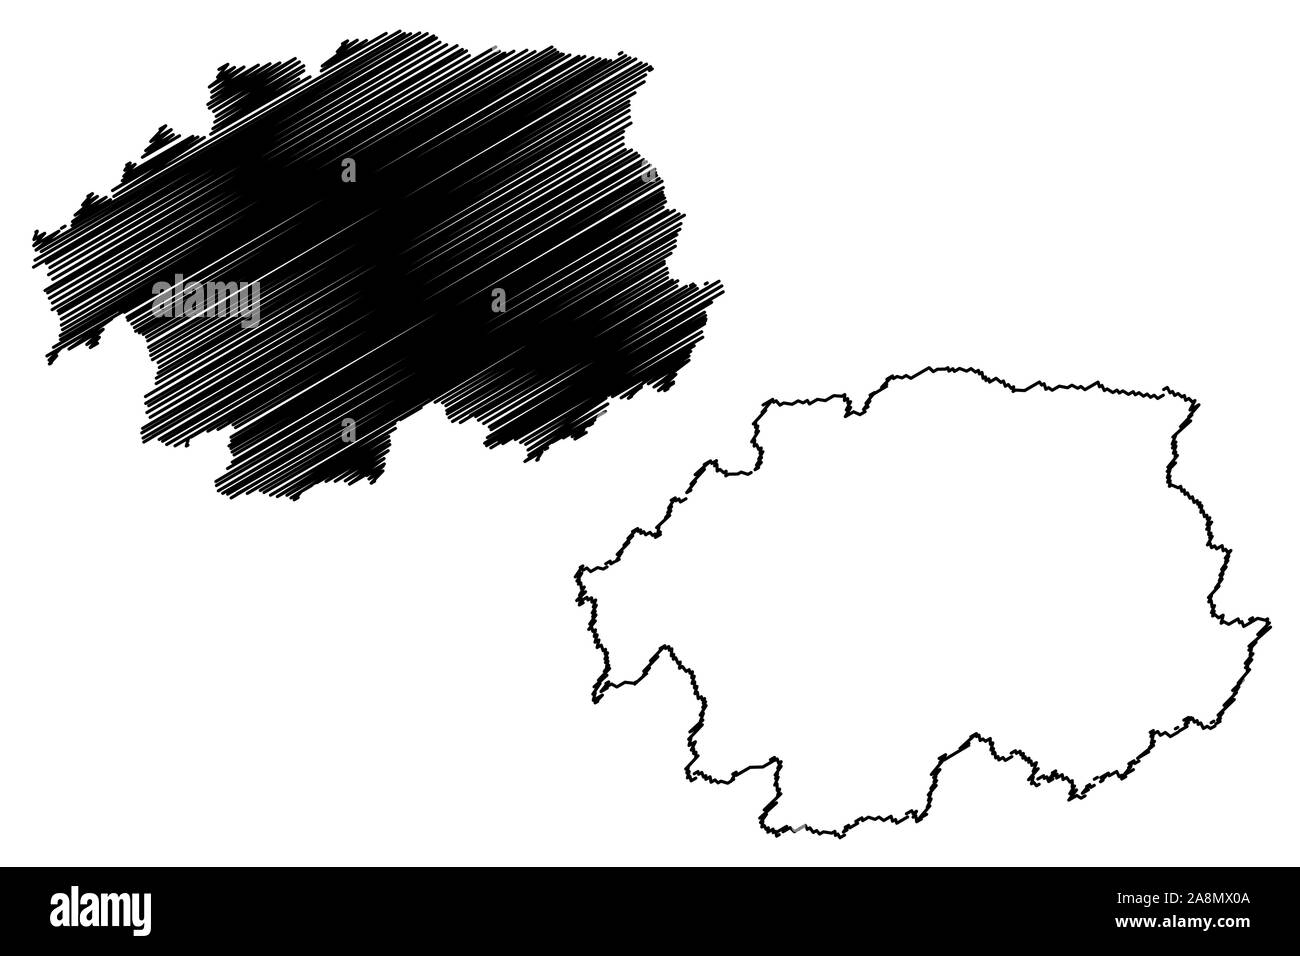 Banska Bystrica Region (Regionen der Slowakei, Slowakische Republik) Karte Vektor-illustration, kritzeln Skizze Banska Bystrica Karte Stock Vektor